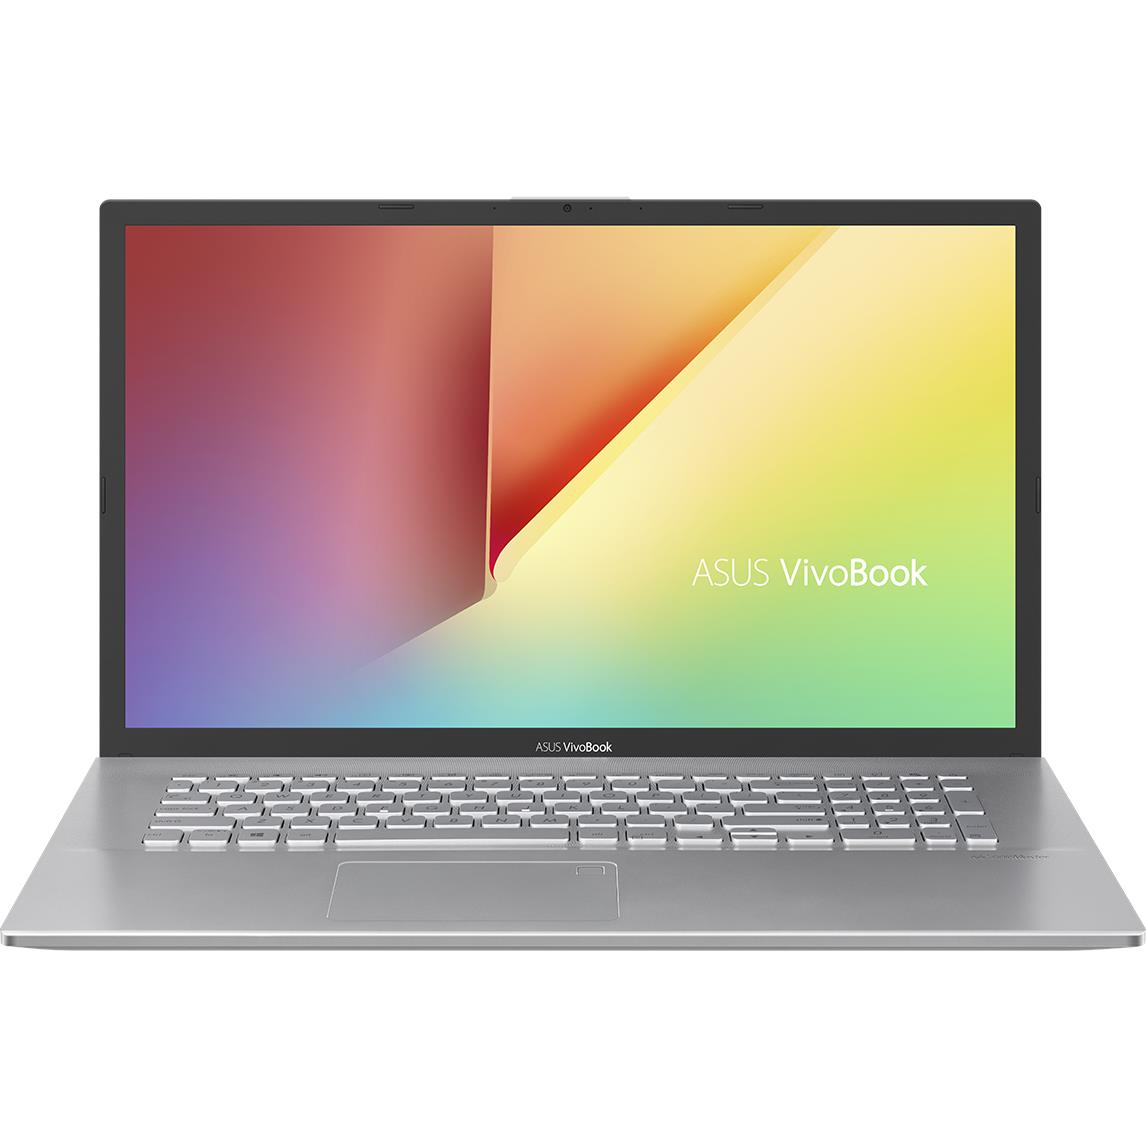 asus vivobook m712 17.3" full hd laptop (512gb) [ryzen 7]